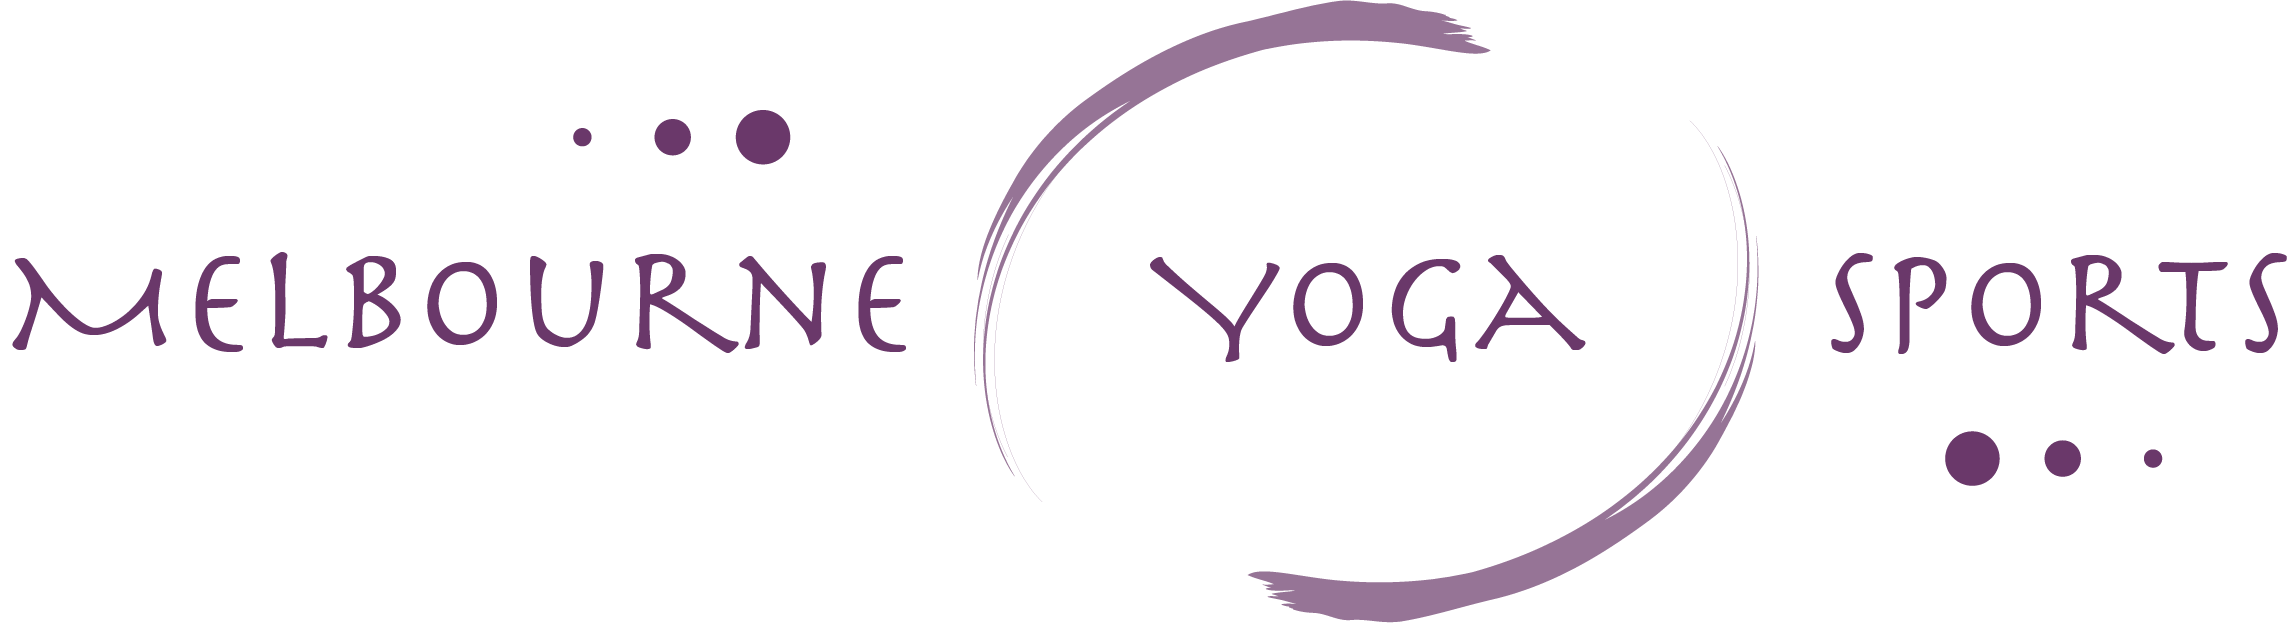 Melbourne Yoga Sports Logo